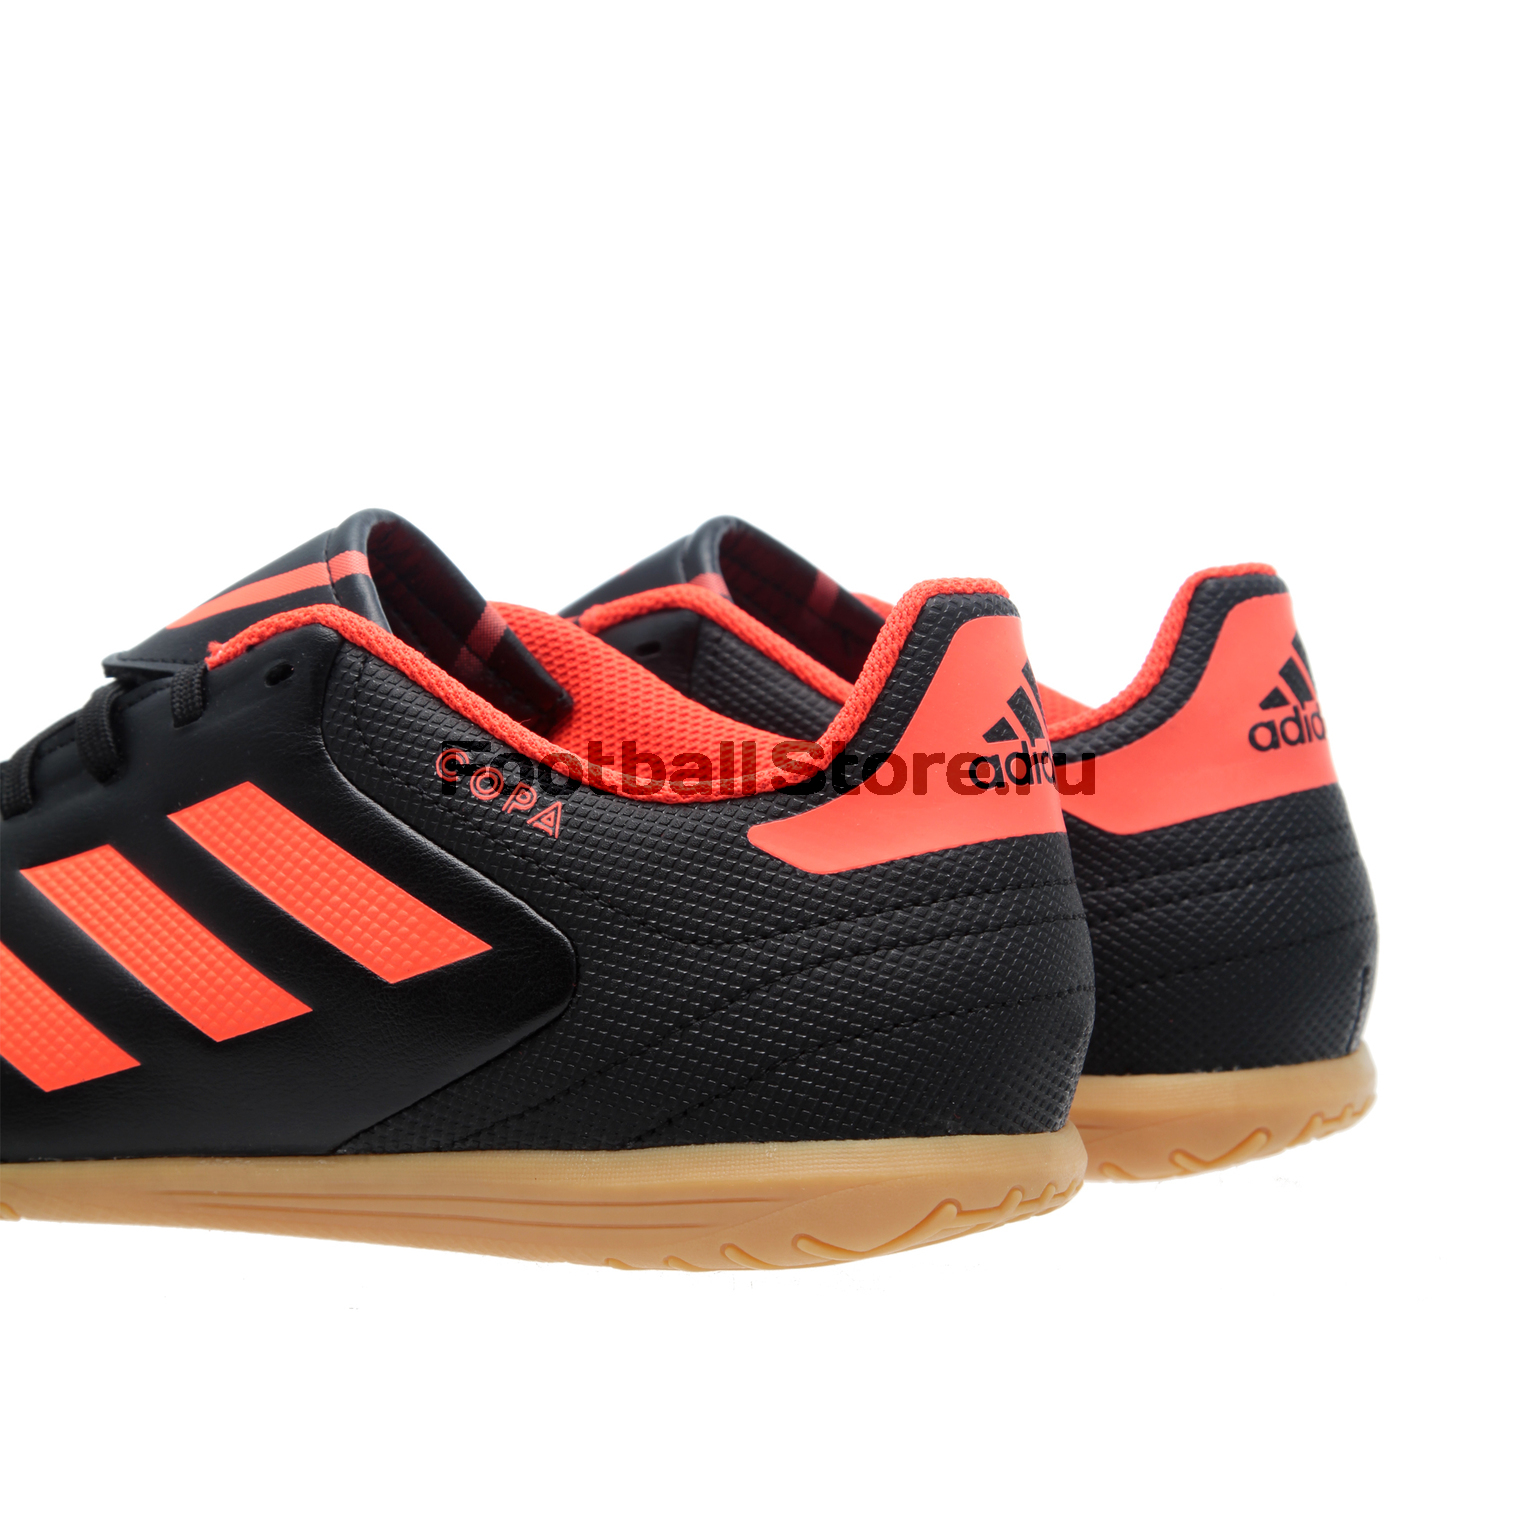 Обувь для зала Adidas Copa 17.4 IN S77150 